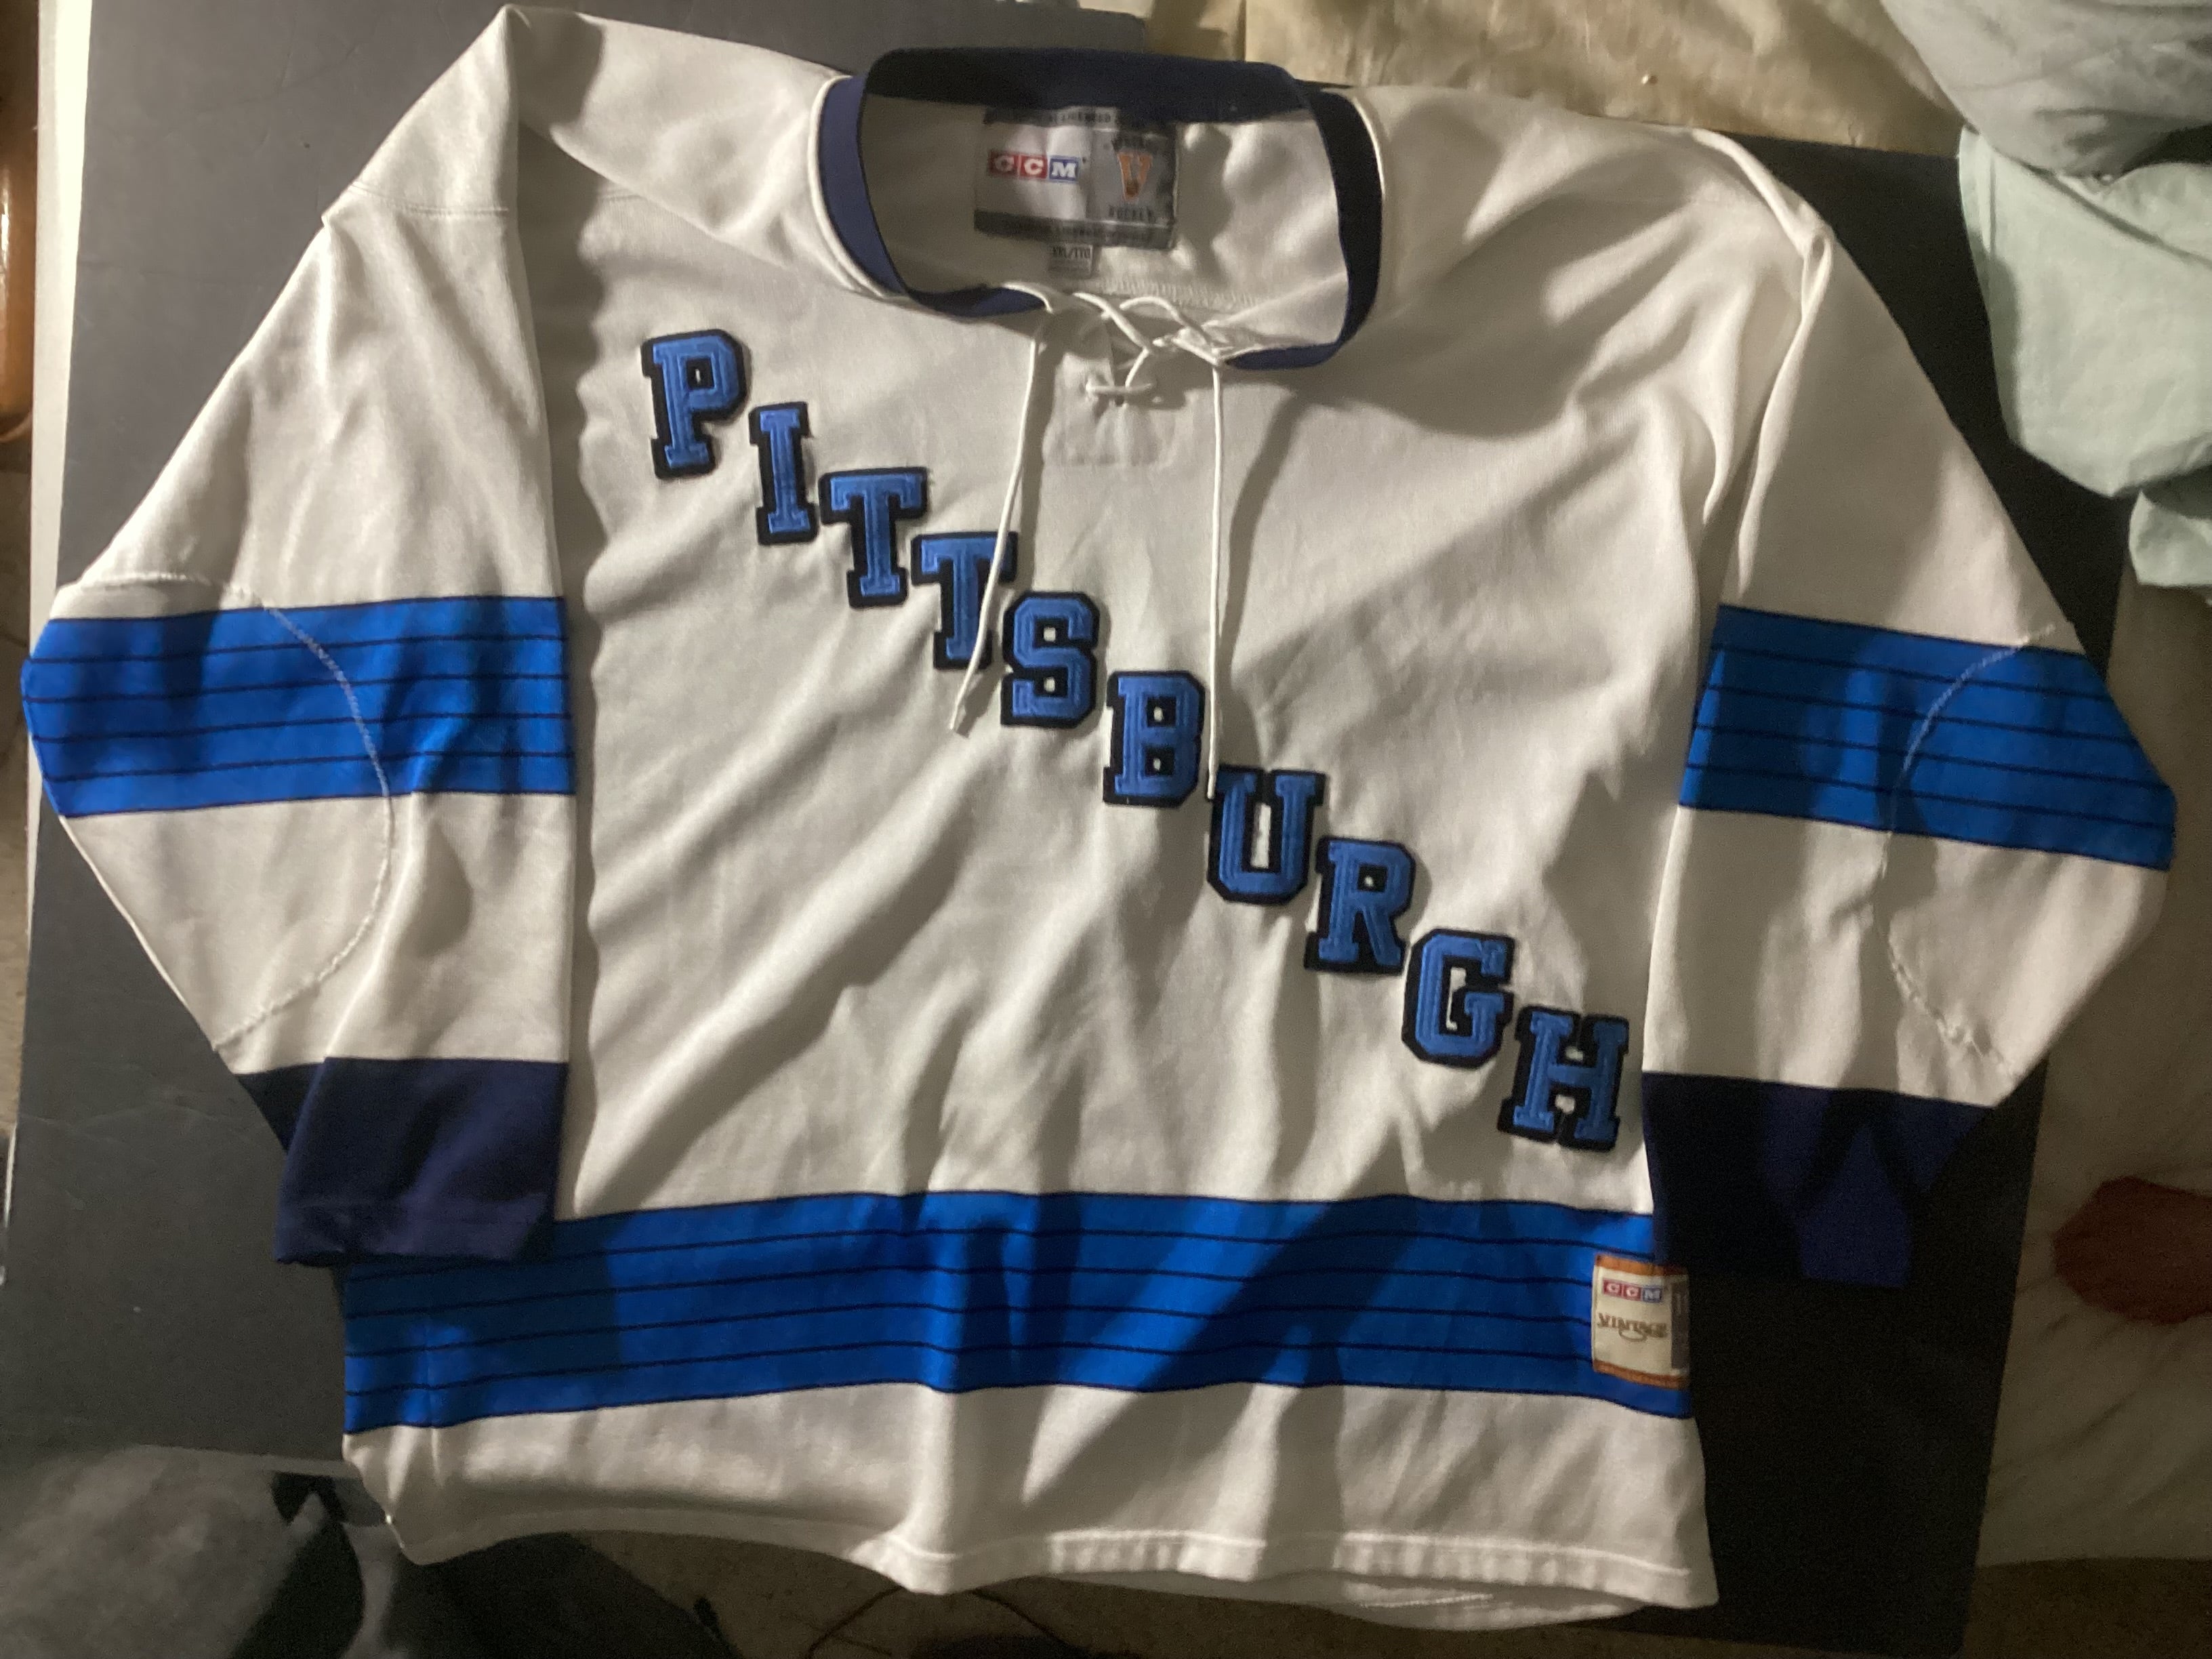 CCM vintage NHL jersey Pittsburgh Penguins 90s - We Love Sports Shirts